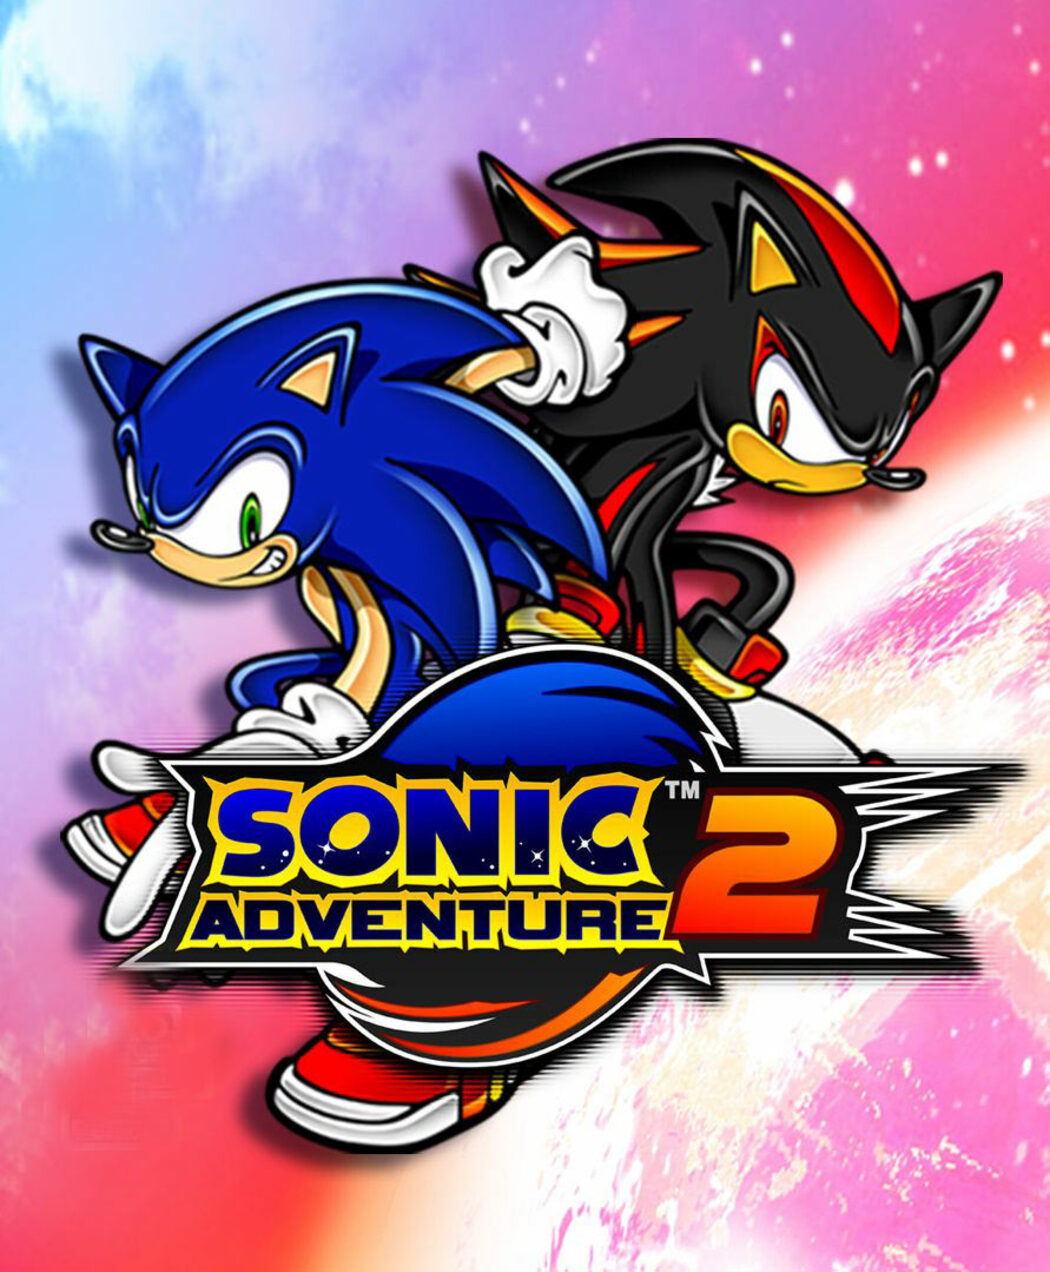 Sonic Adventure 2 - Battle Mode DLC Steam Key for PC - Buy now